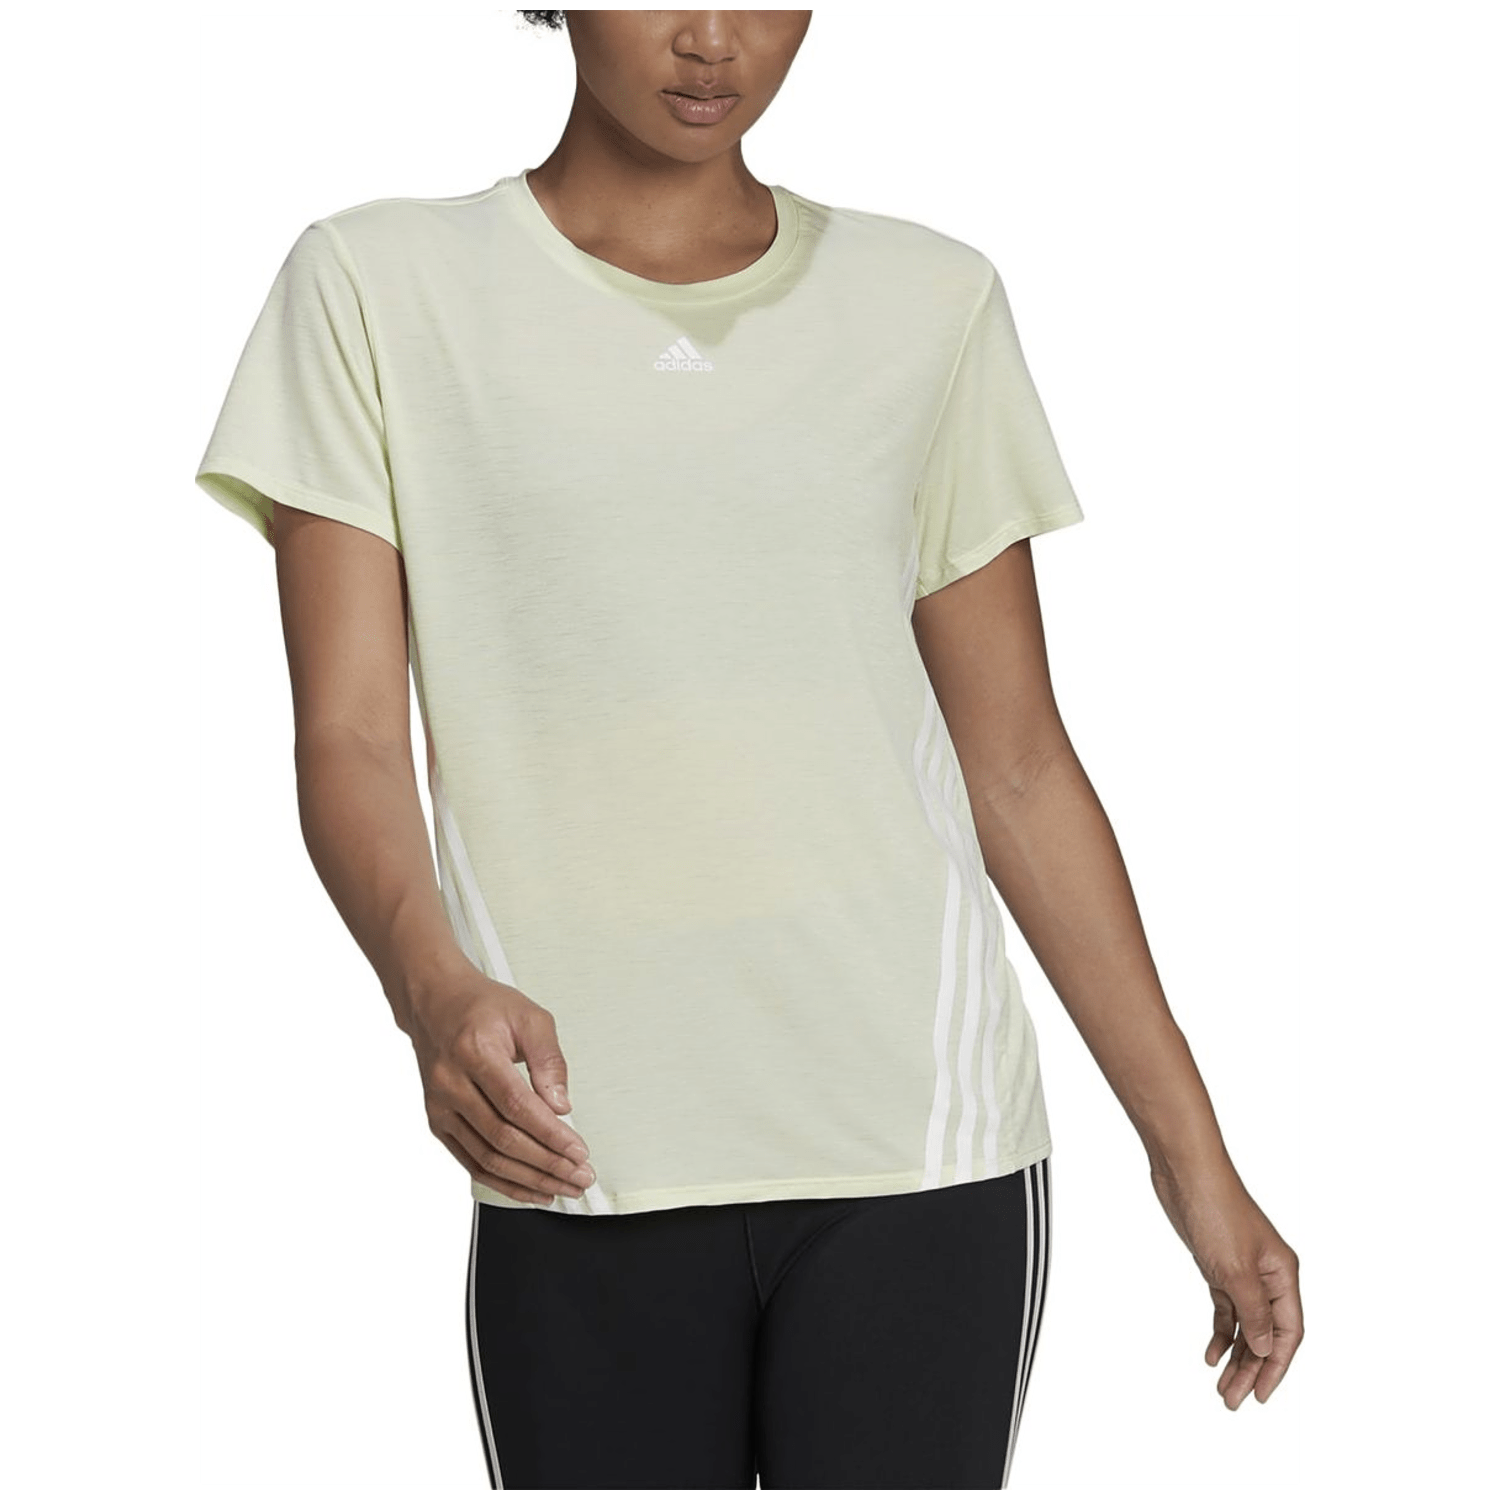 Adidas Trainicons 3-Streifen T-Shirt Damen